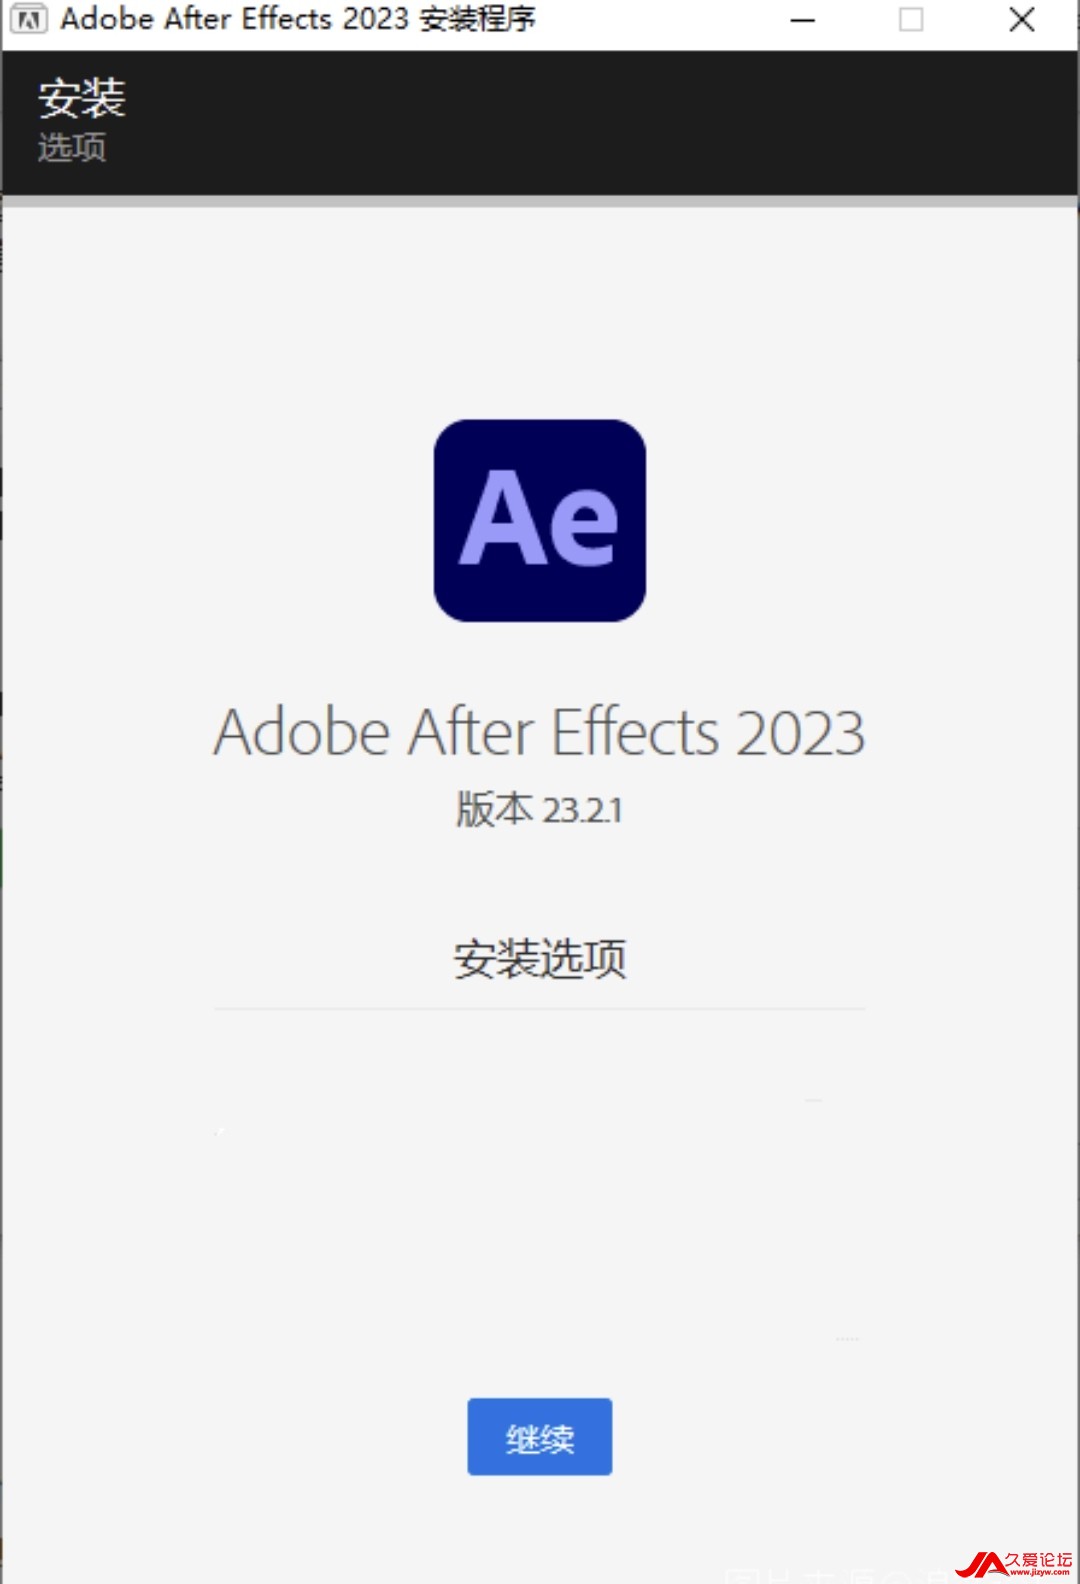 ƽ-[AEƽ] Adobe After Effects 2023 23.2.1Ƶ(1)